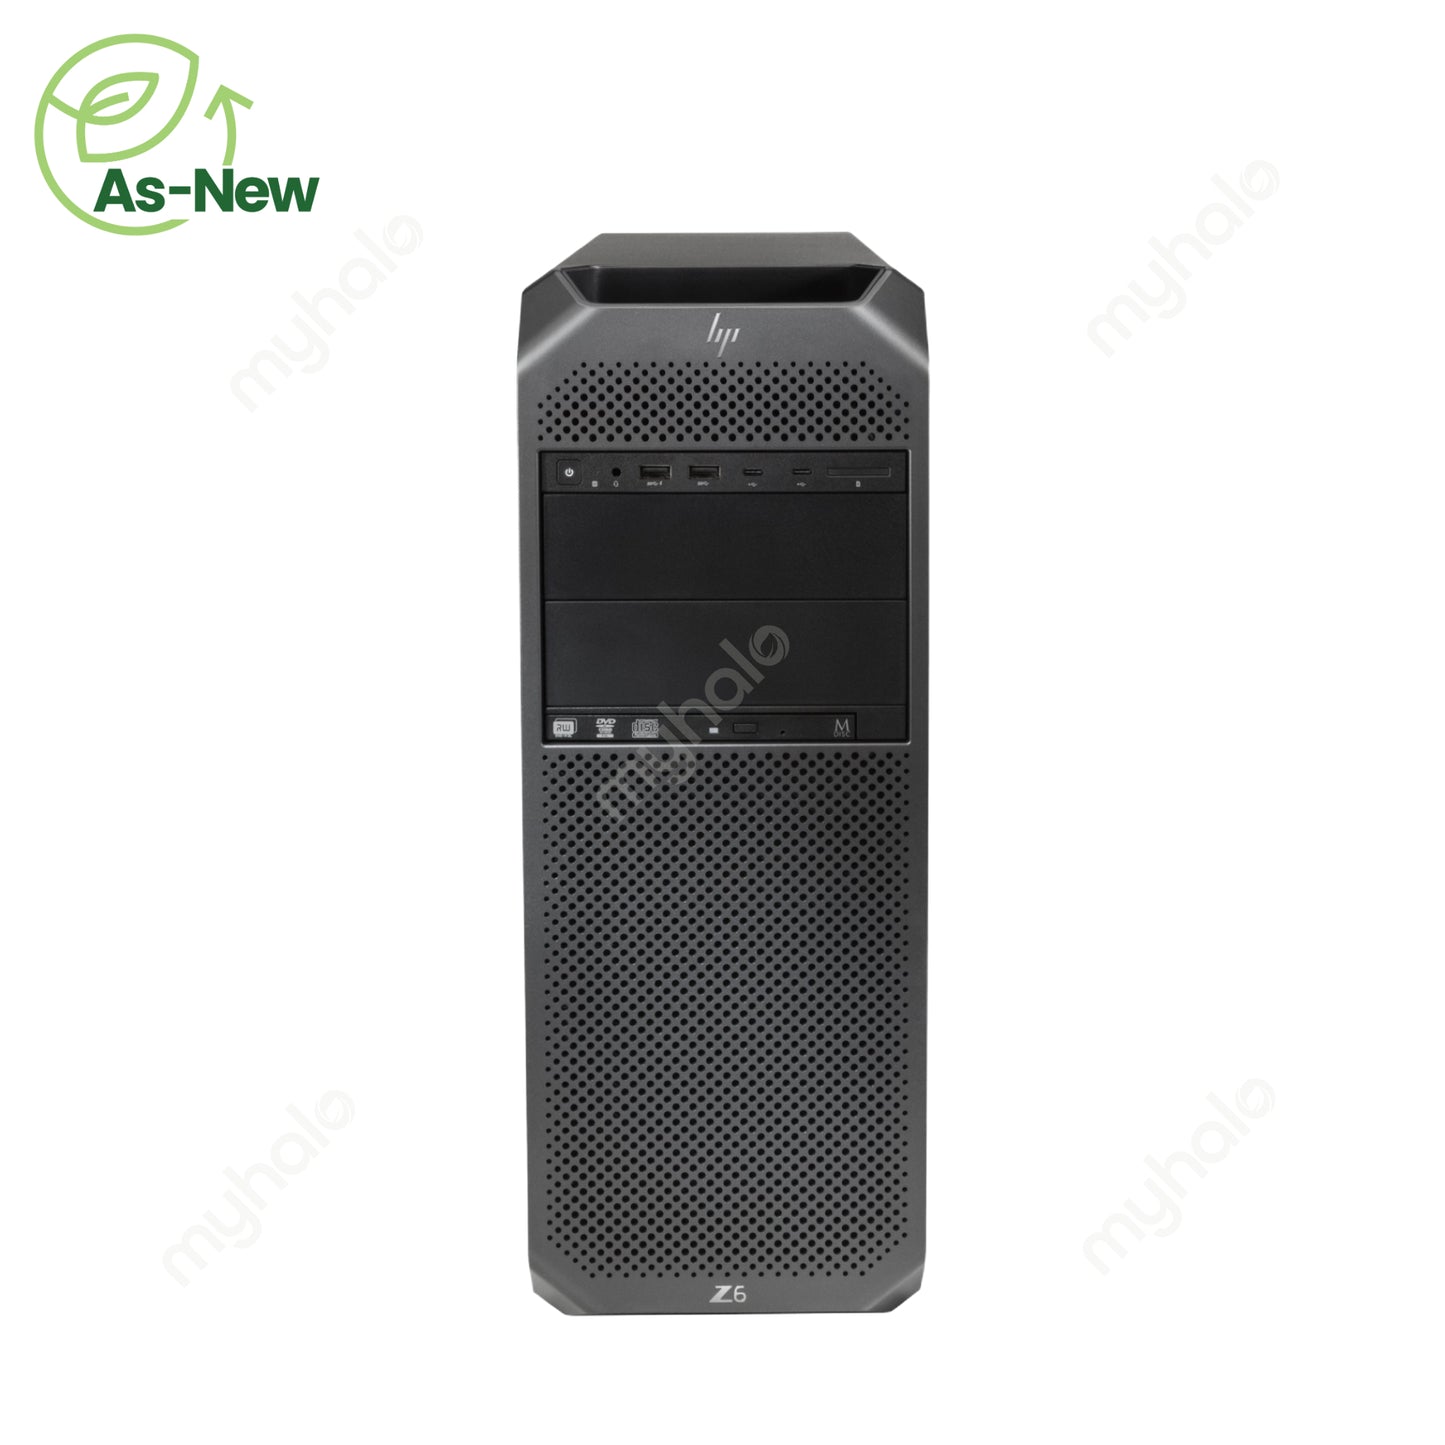 HP Z6 G4 Workstation PC (4HJ64AV) (Xeon / 32GB / 256GB)